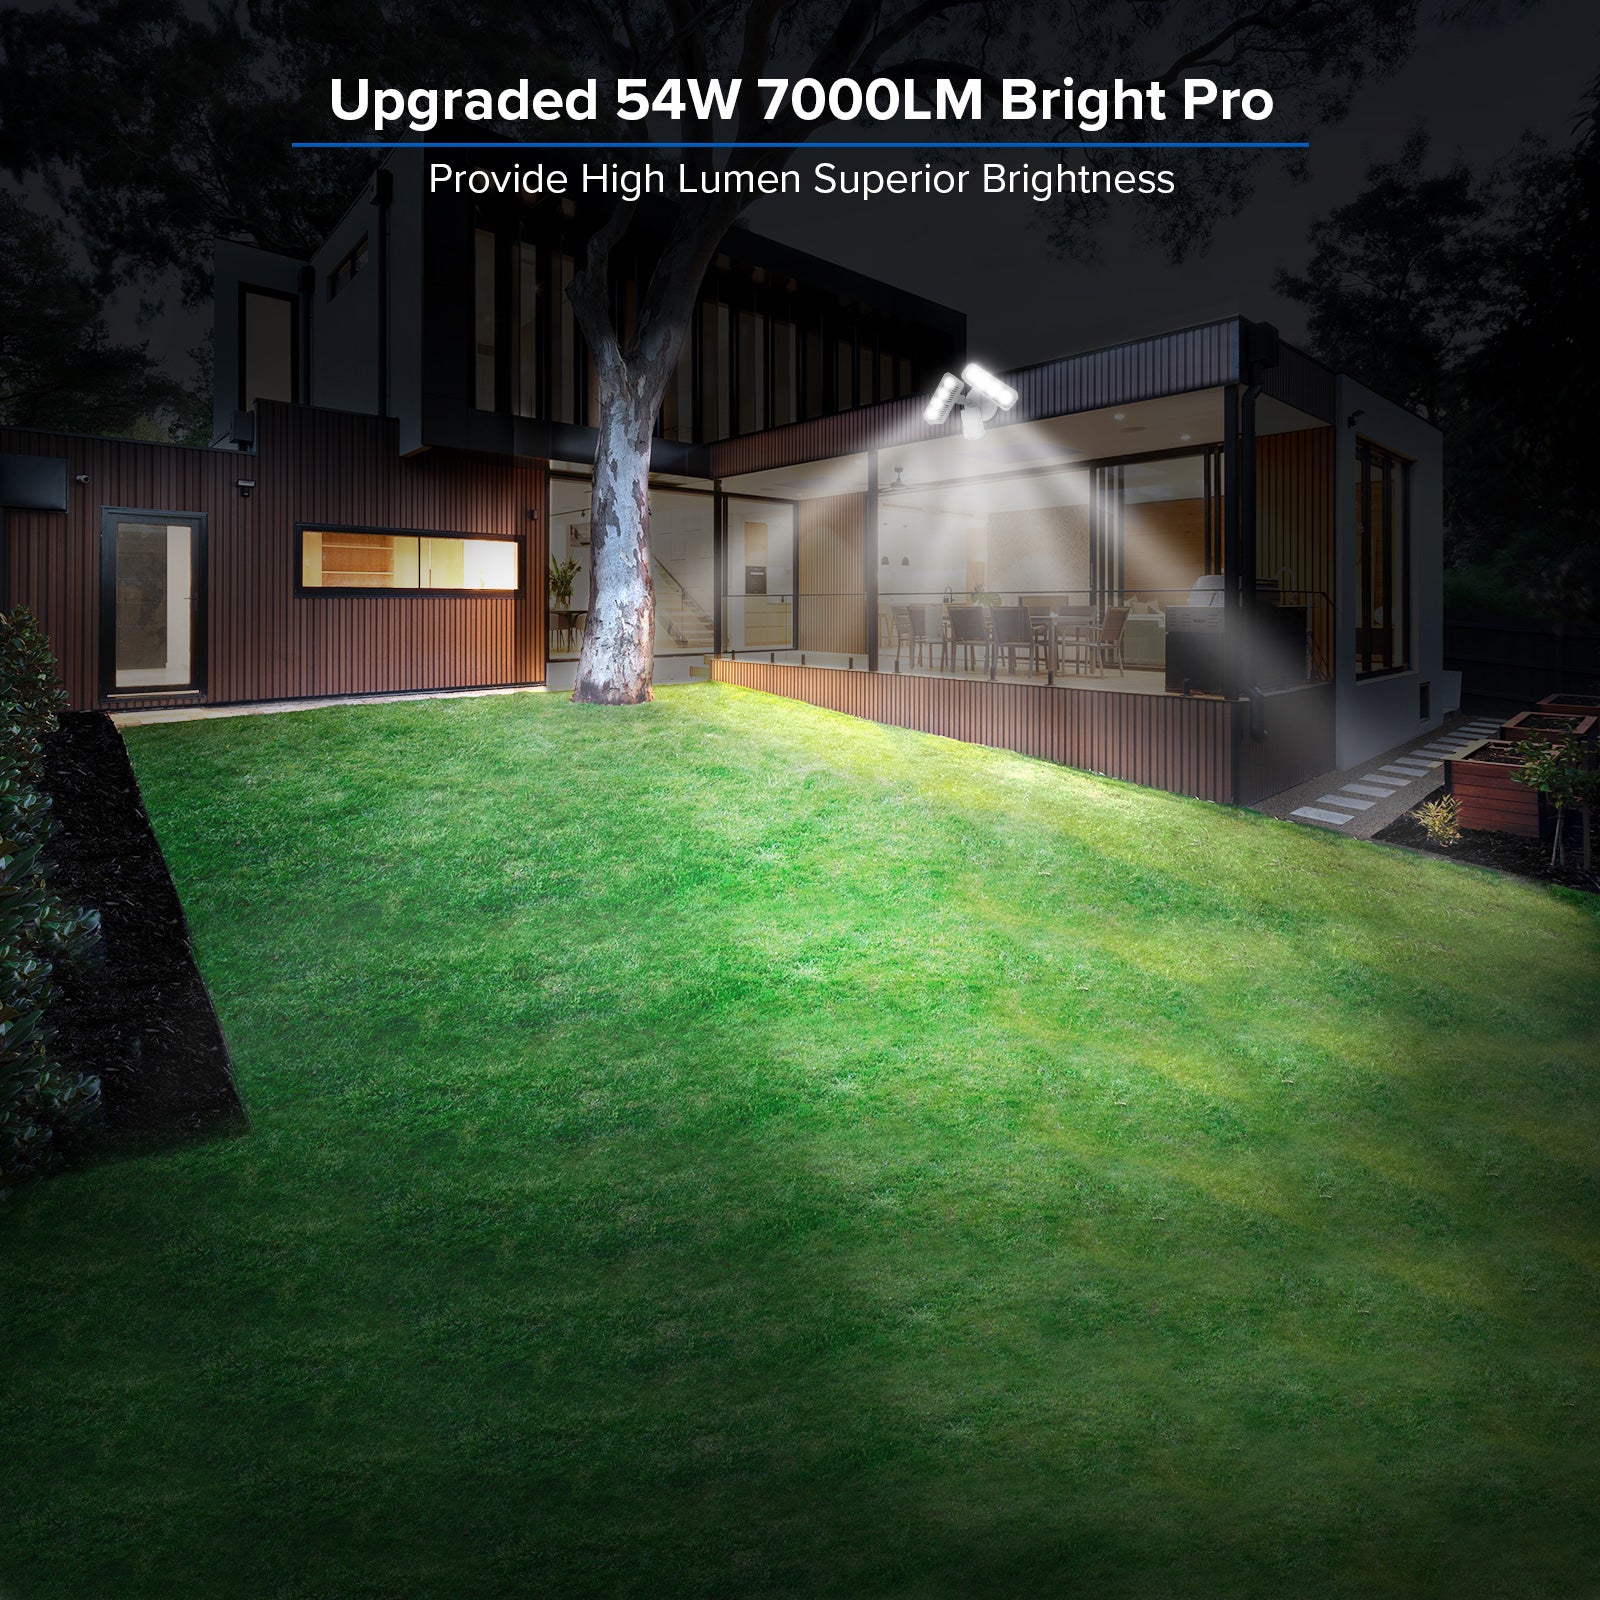 Upgraded 54W Led Security Light (Dusk to Dawn&Motion Sensor), upgraded 54W 7000 lumens bright pro, provide high lumen superior brightness